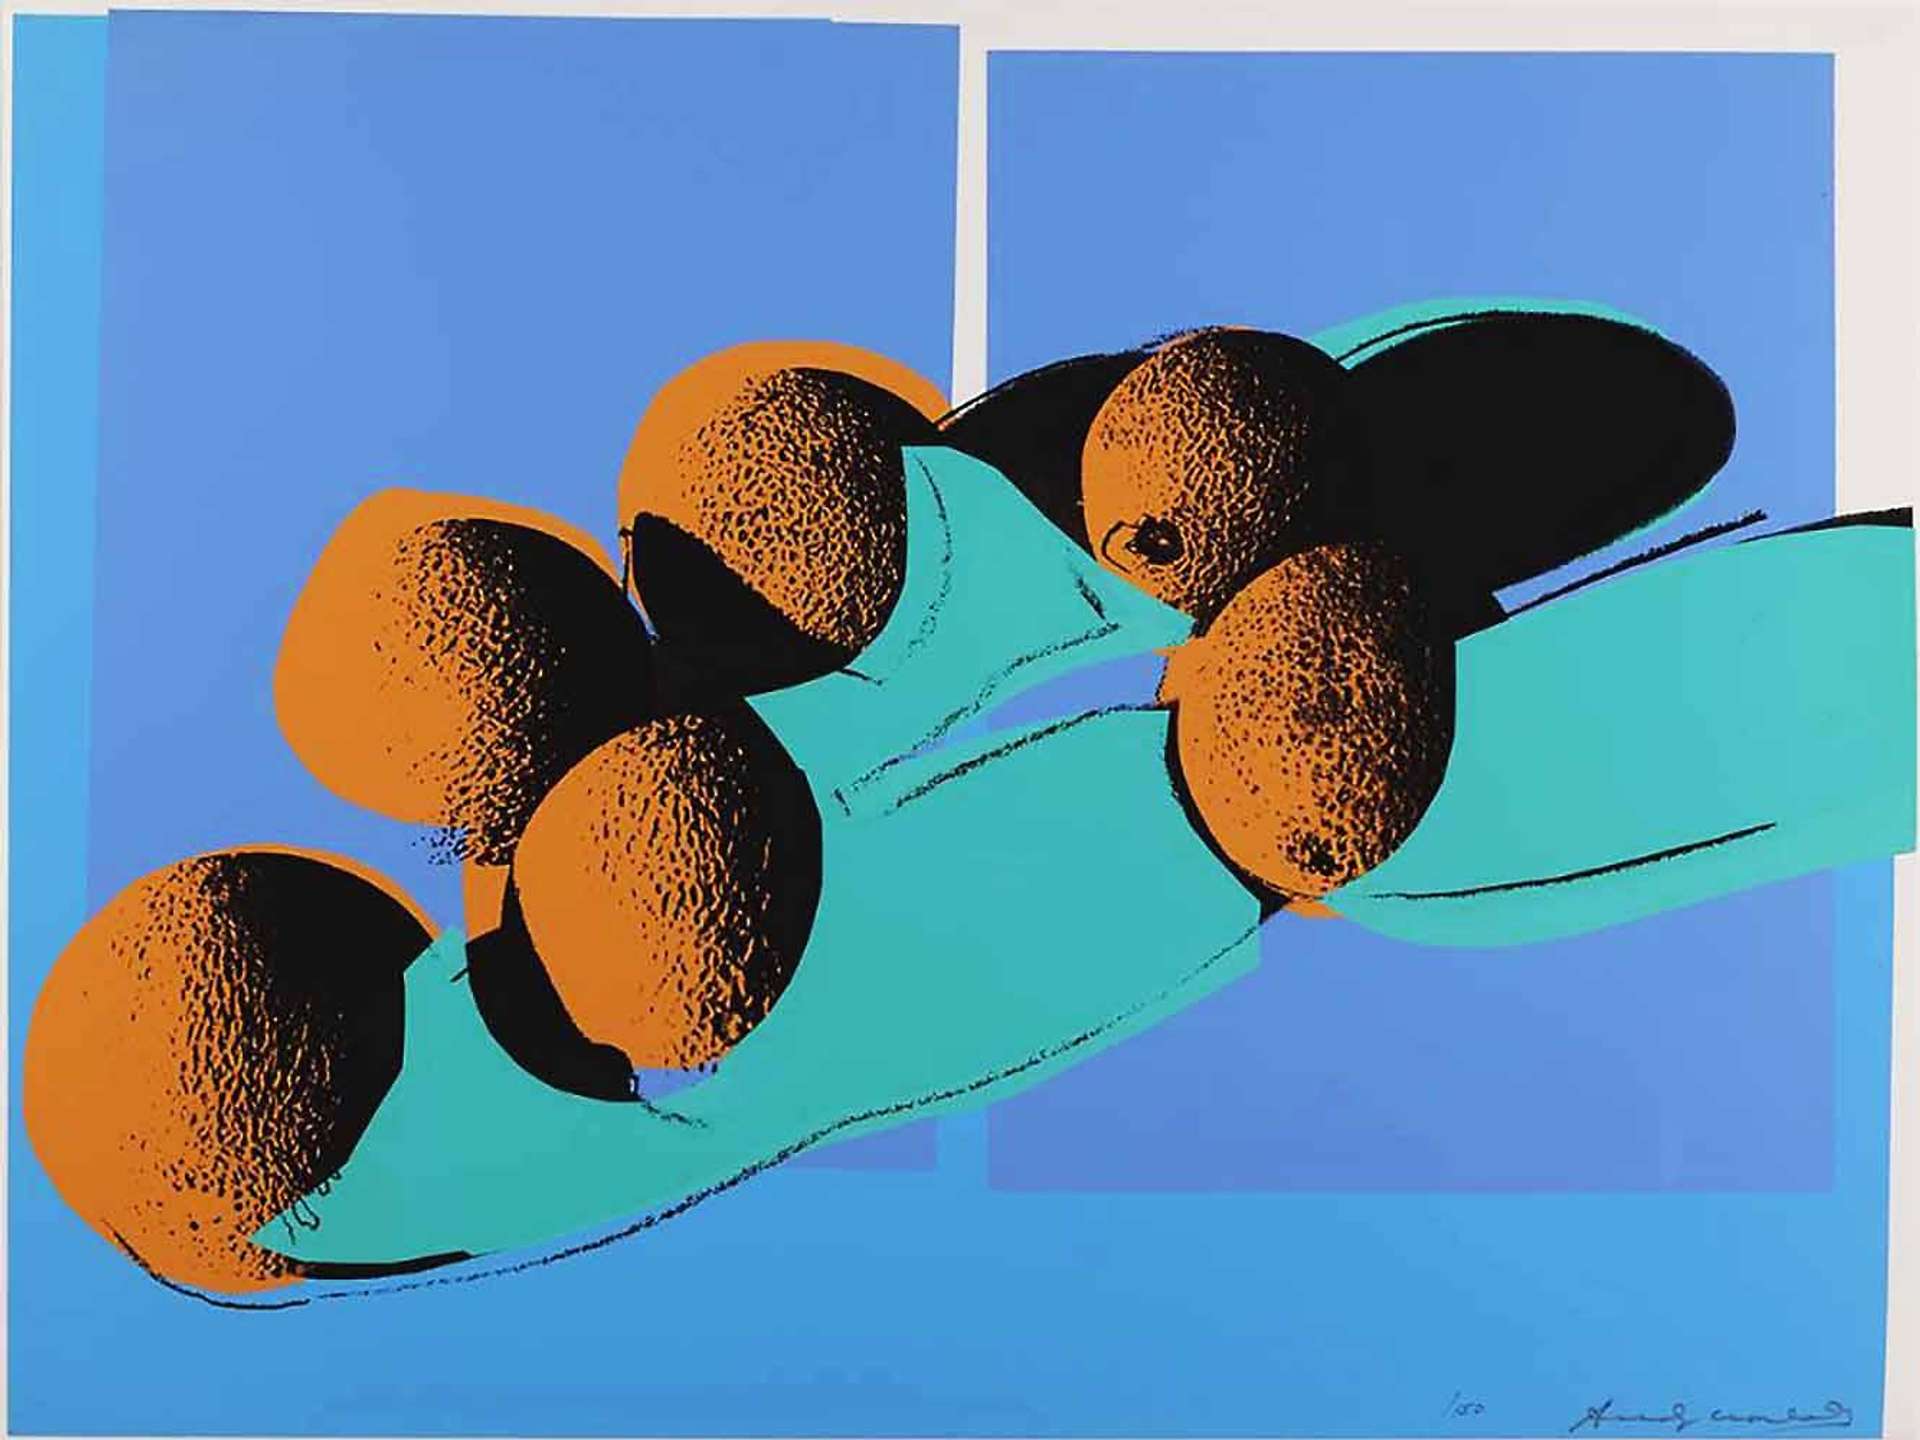 Cantaloupes I (F. & S. II.201) by Andy Warhol